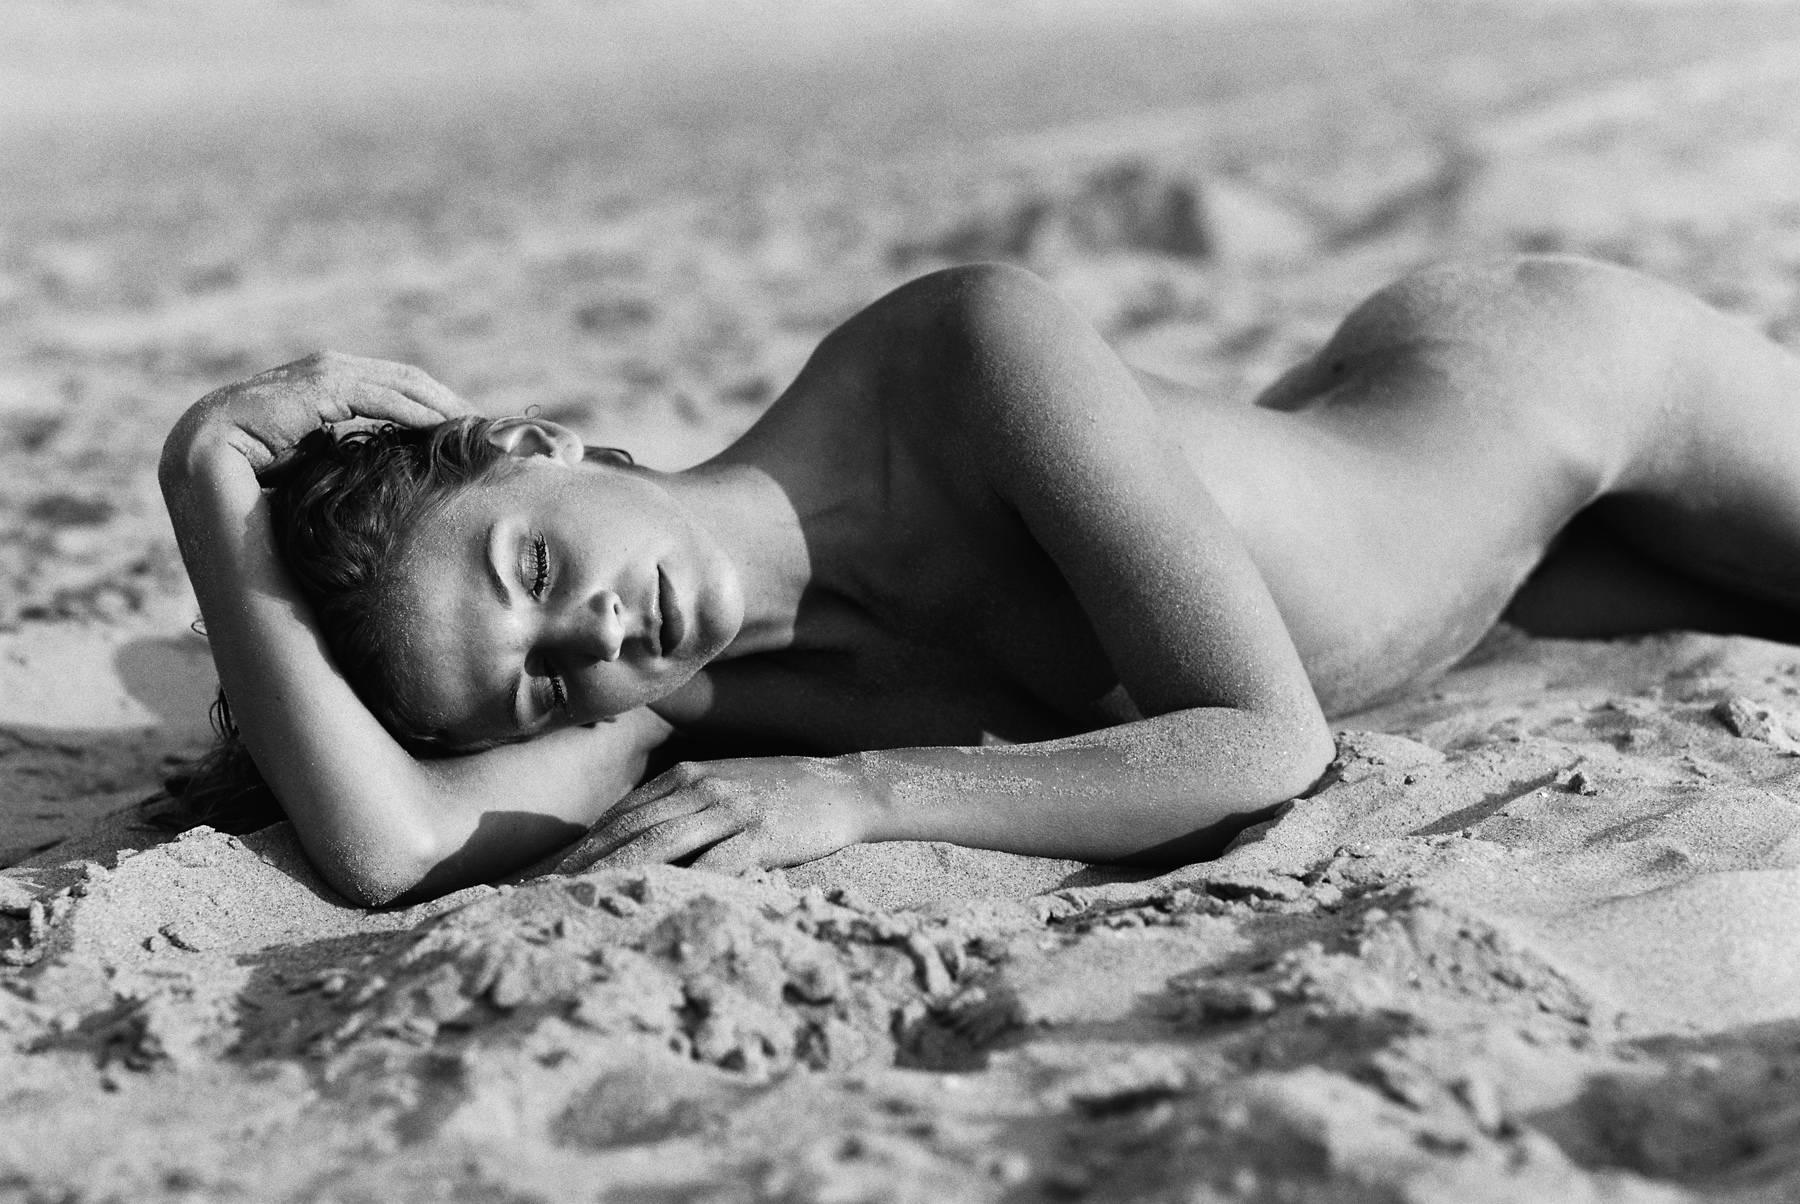 René de Haan Nude Photograph - Bianca